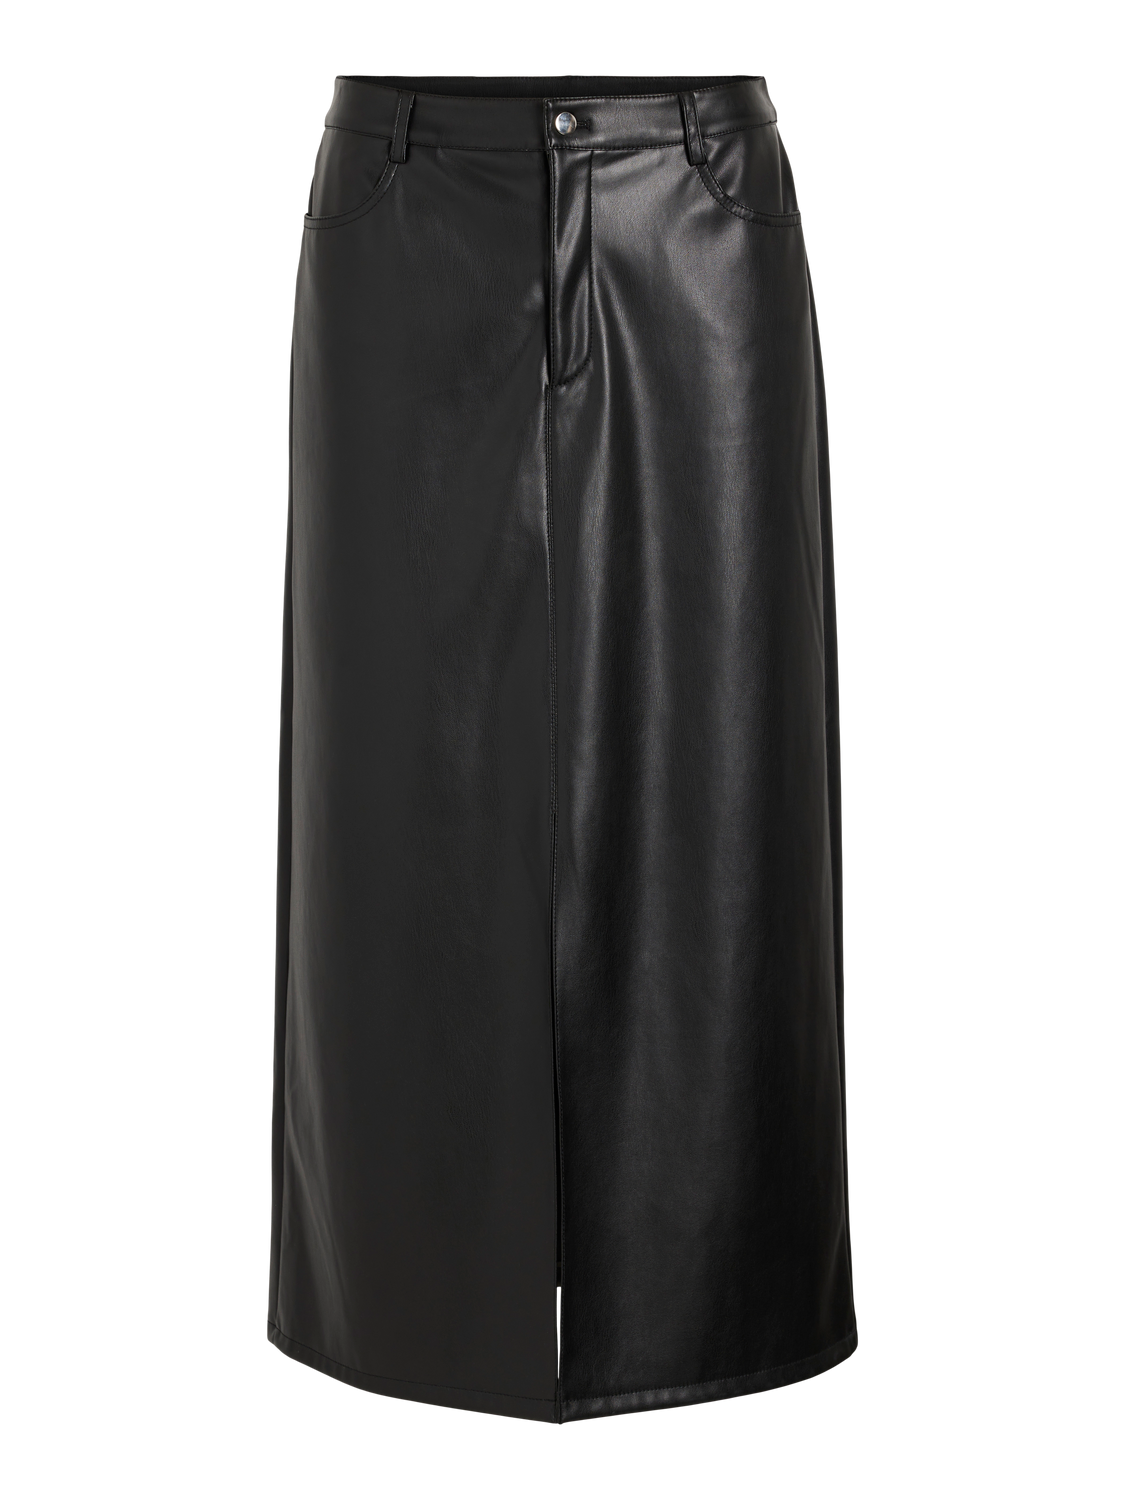 VIMUNA Skirt - Black